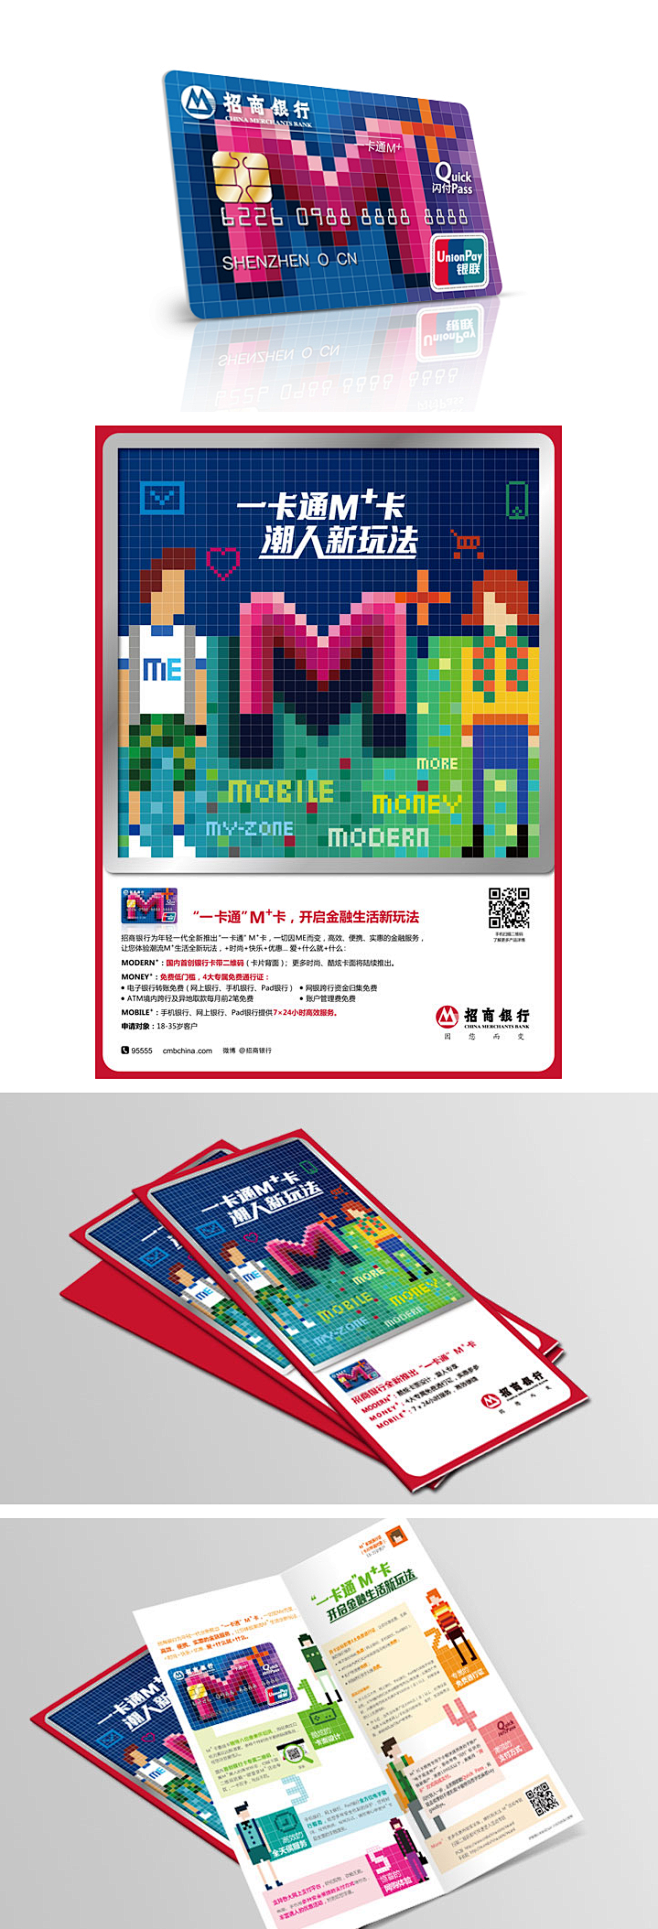 M+卡招行卡片设计|M+信用卡宣传单设计...